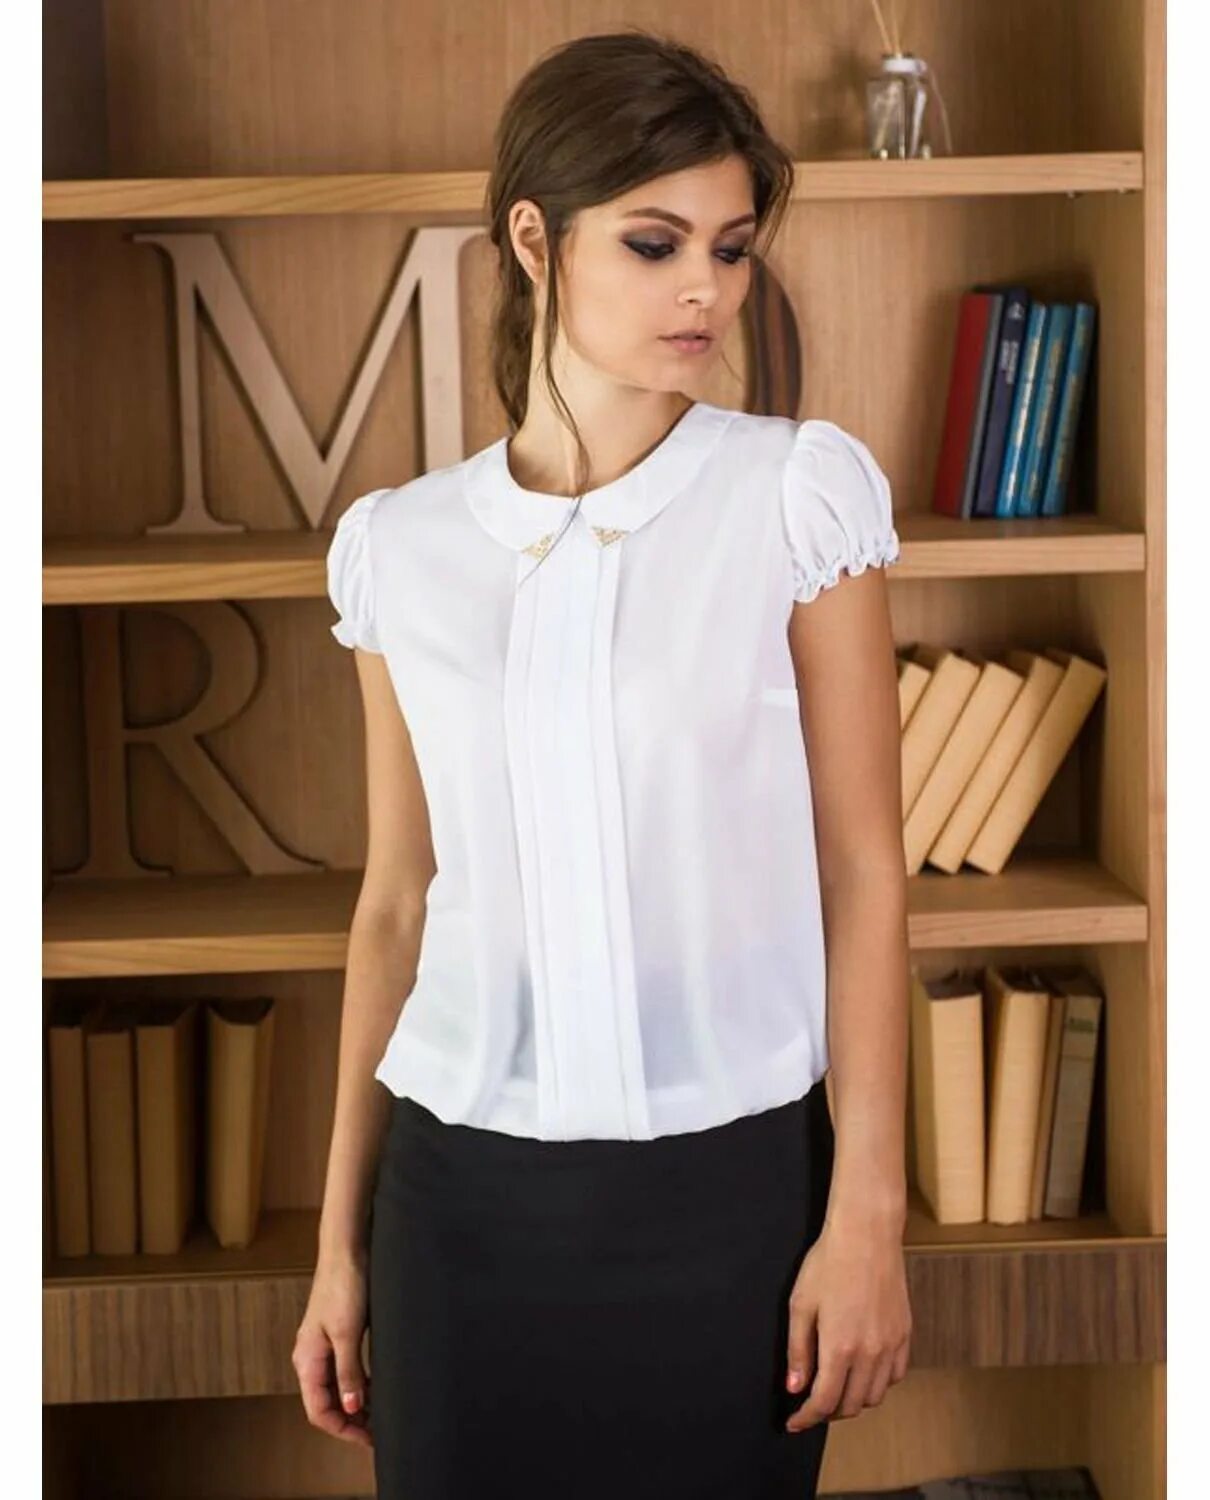 Узкая блузка. Блузка с коротким рукавом. Блузка женская с коротким рукавом. Белая блузка. Фасон блузок с коротким рукавом.